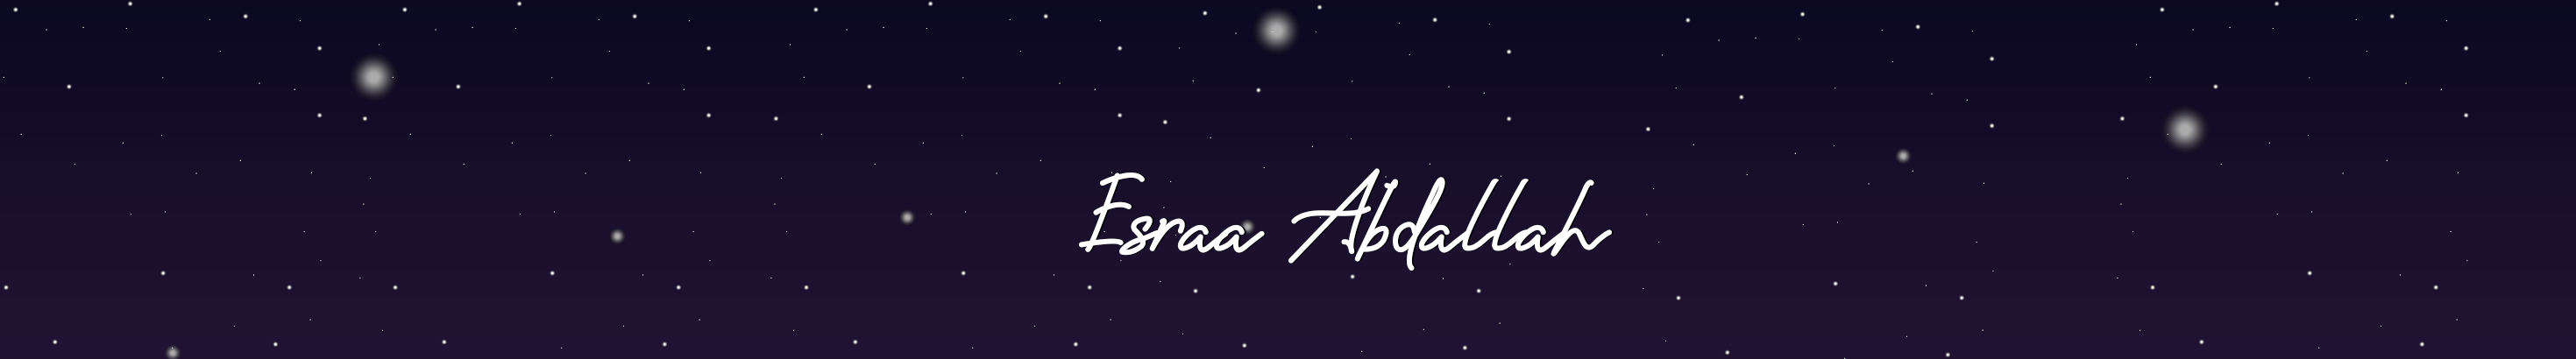 Banner de perfil de Esraa abdallah